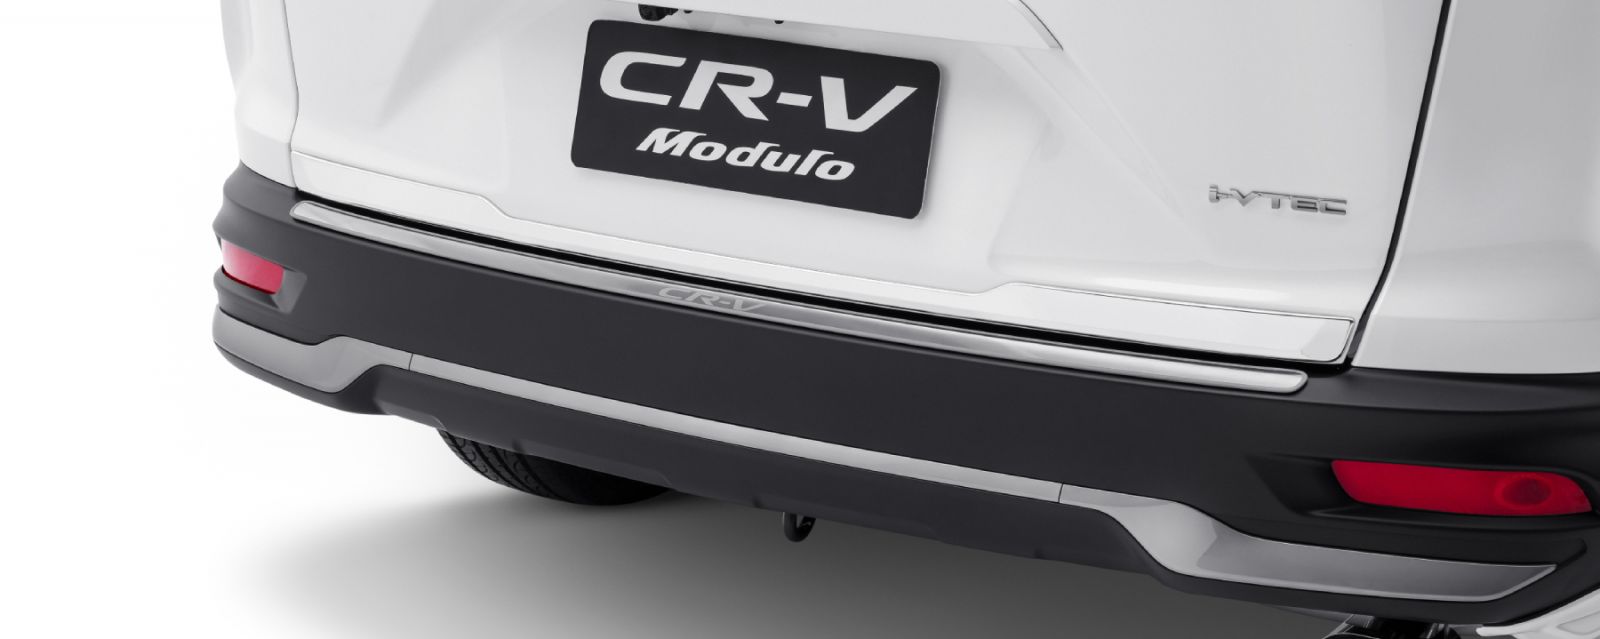 Honda CR-V Modulo